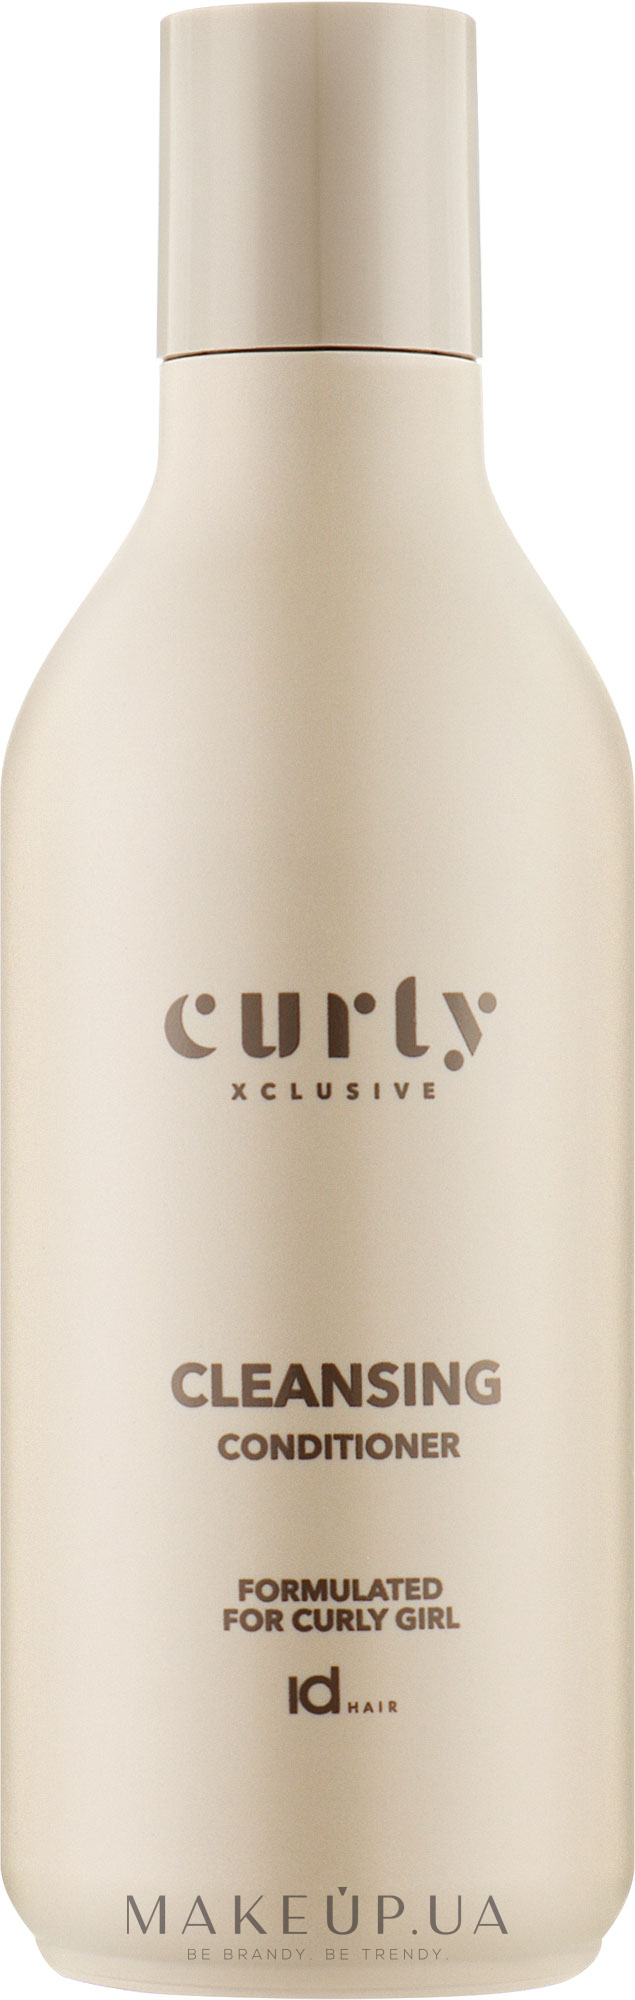 Очищающий кондиционер для волос - idHair Curly Xclusive Cleansing Conditioner — фото 250ml